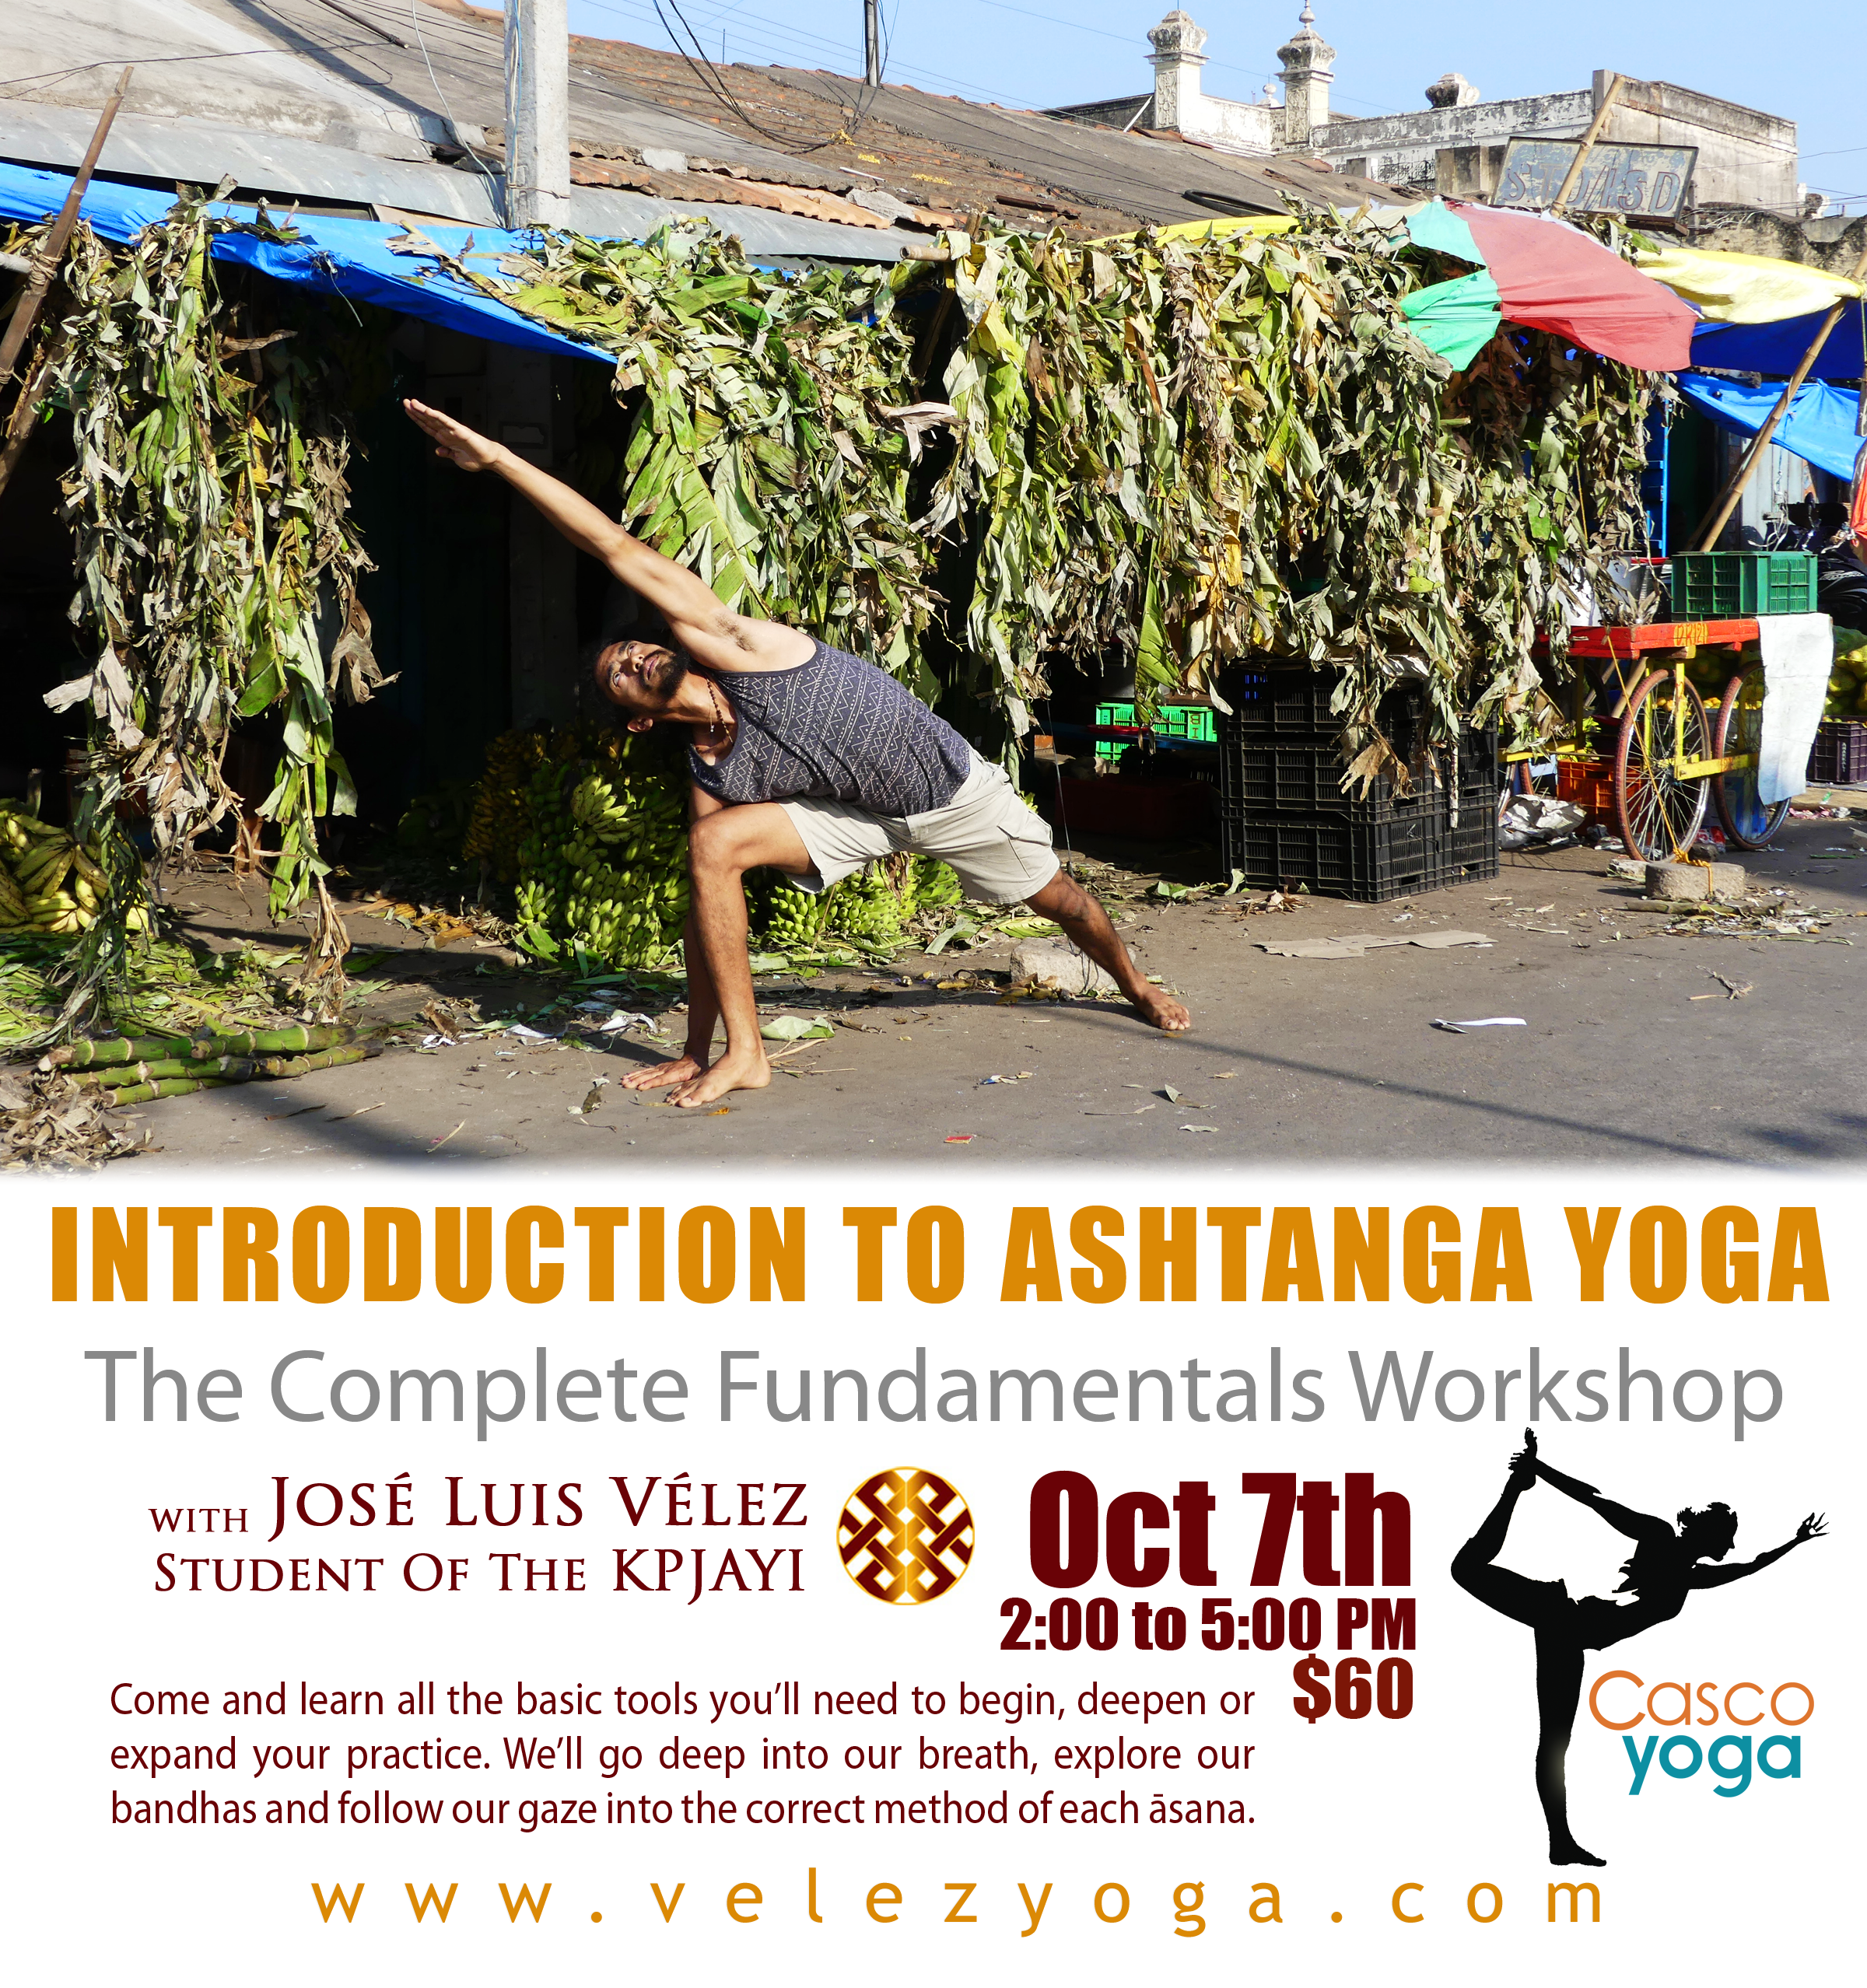 Introduction to Ashtanga Yoga, at Casco Yoga Panama. Casco Viejo. Casco Antiguo. Panama City Panama. José Luis Vélez